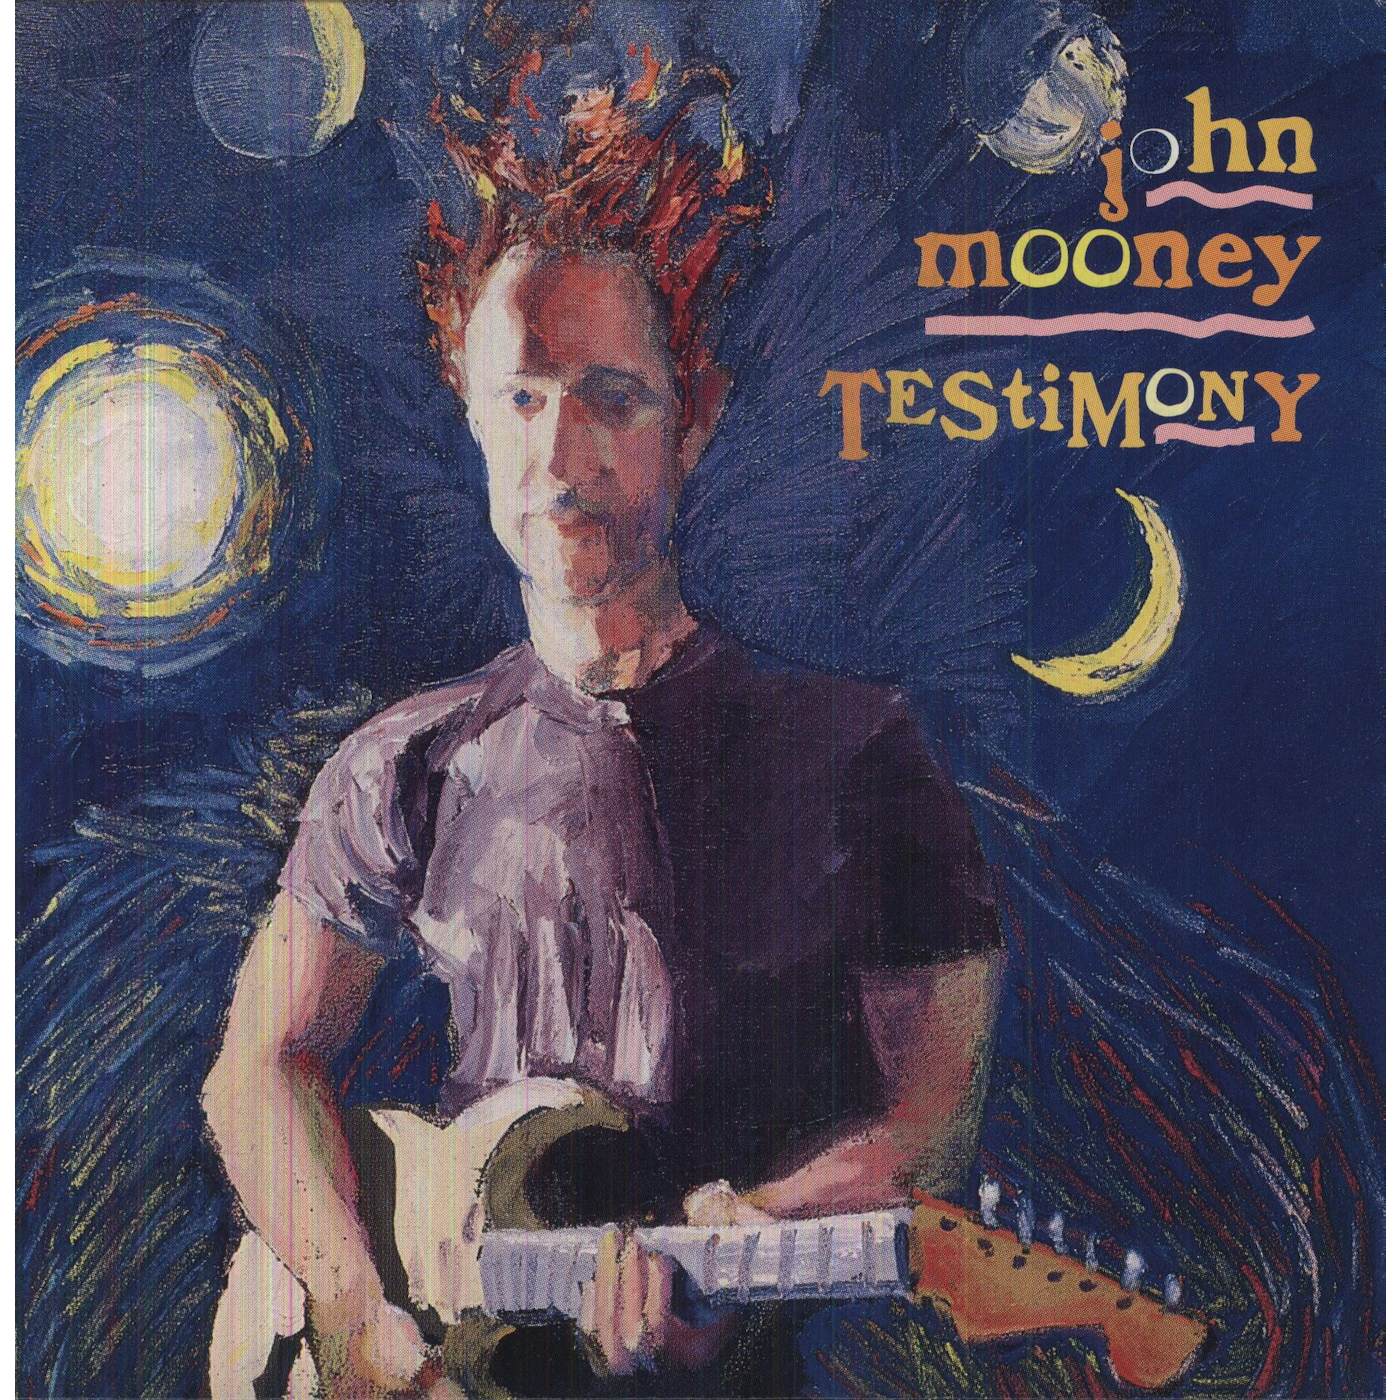 John Mooney Testimony Vinyl Record